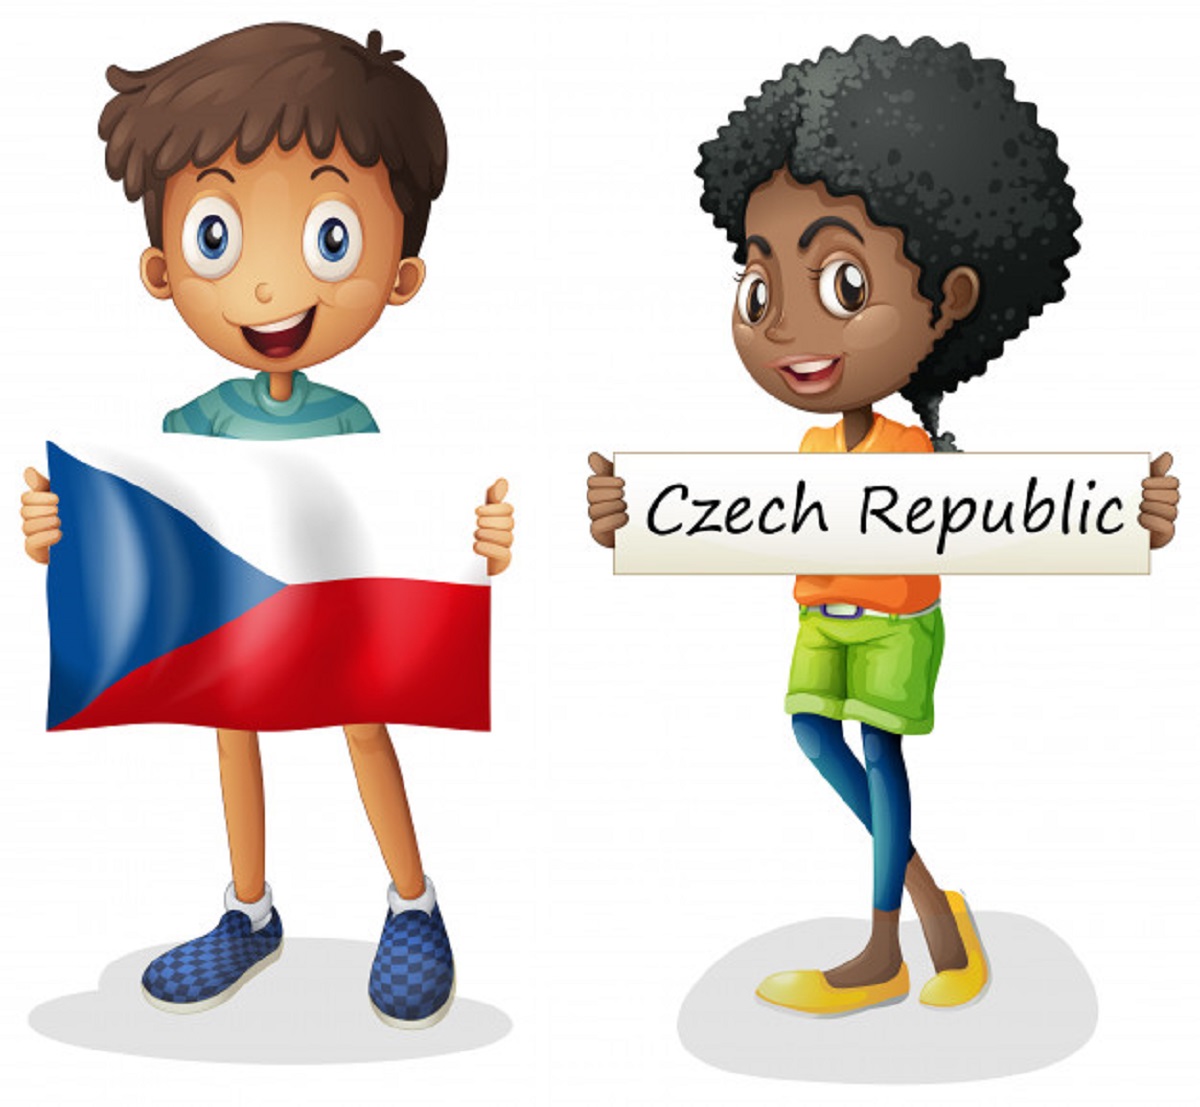 boy-girl-with-flag-czech-republic_1308-9654